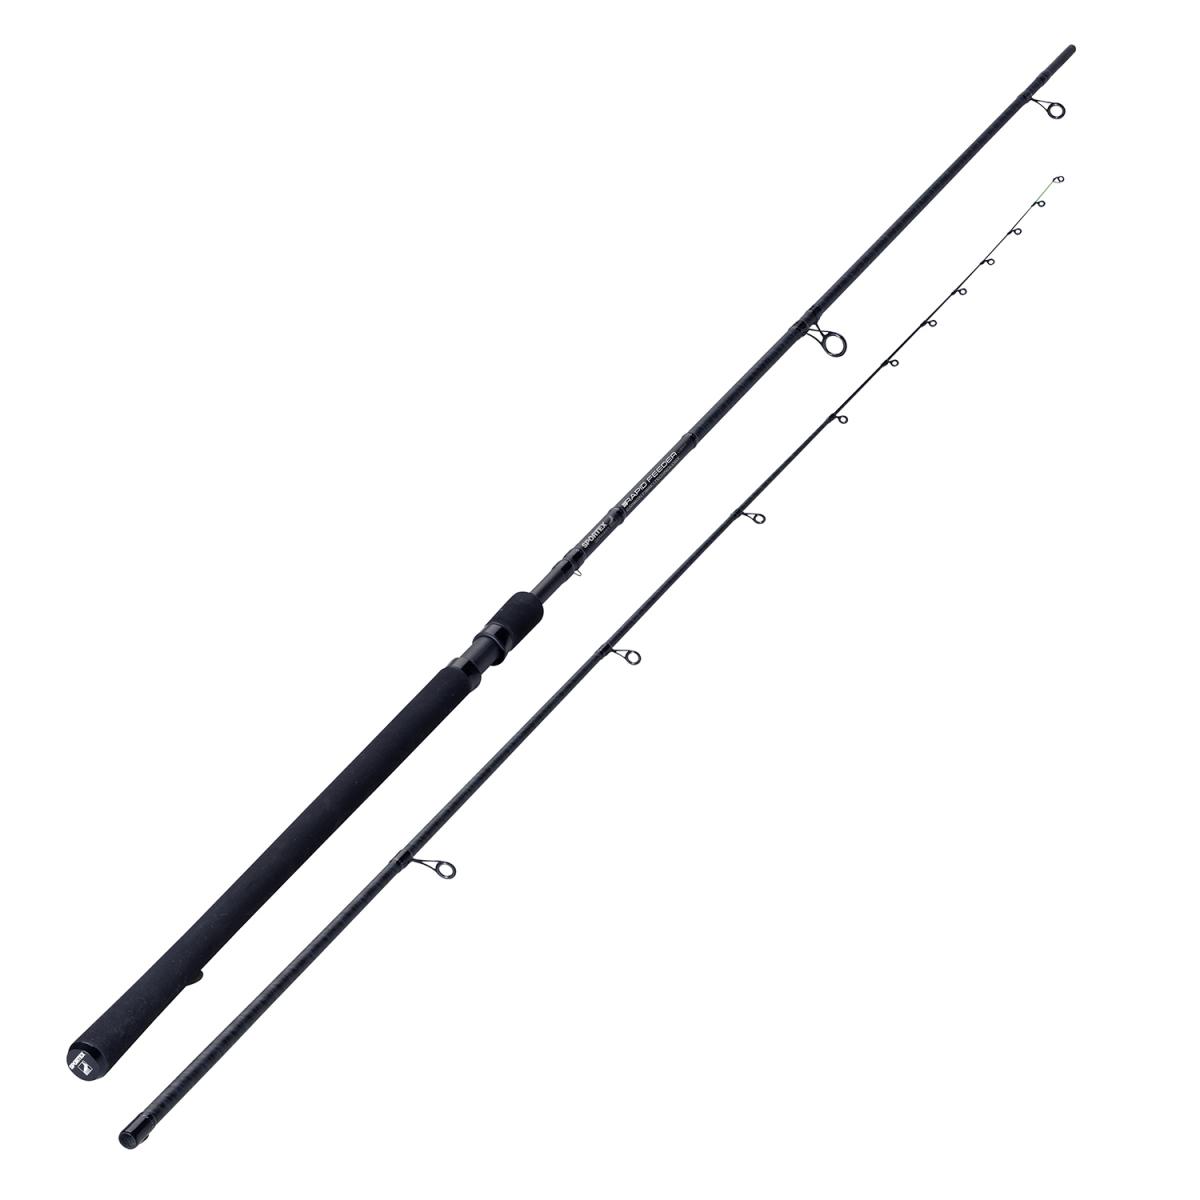 Sportex Rapid Pellet Feeder Rod